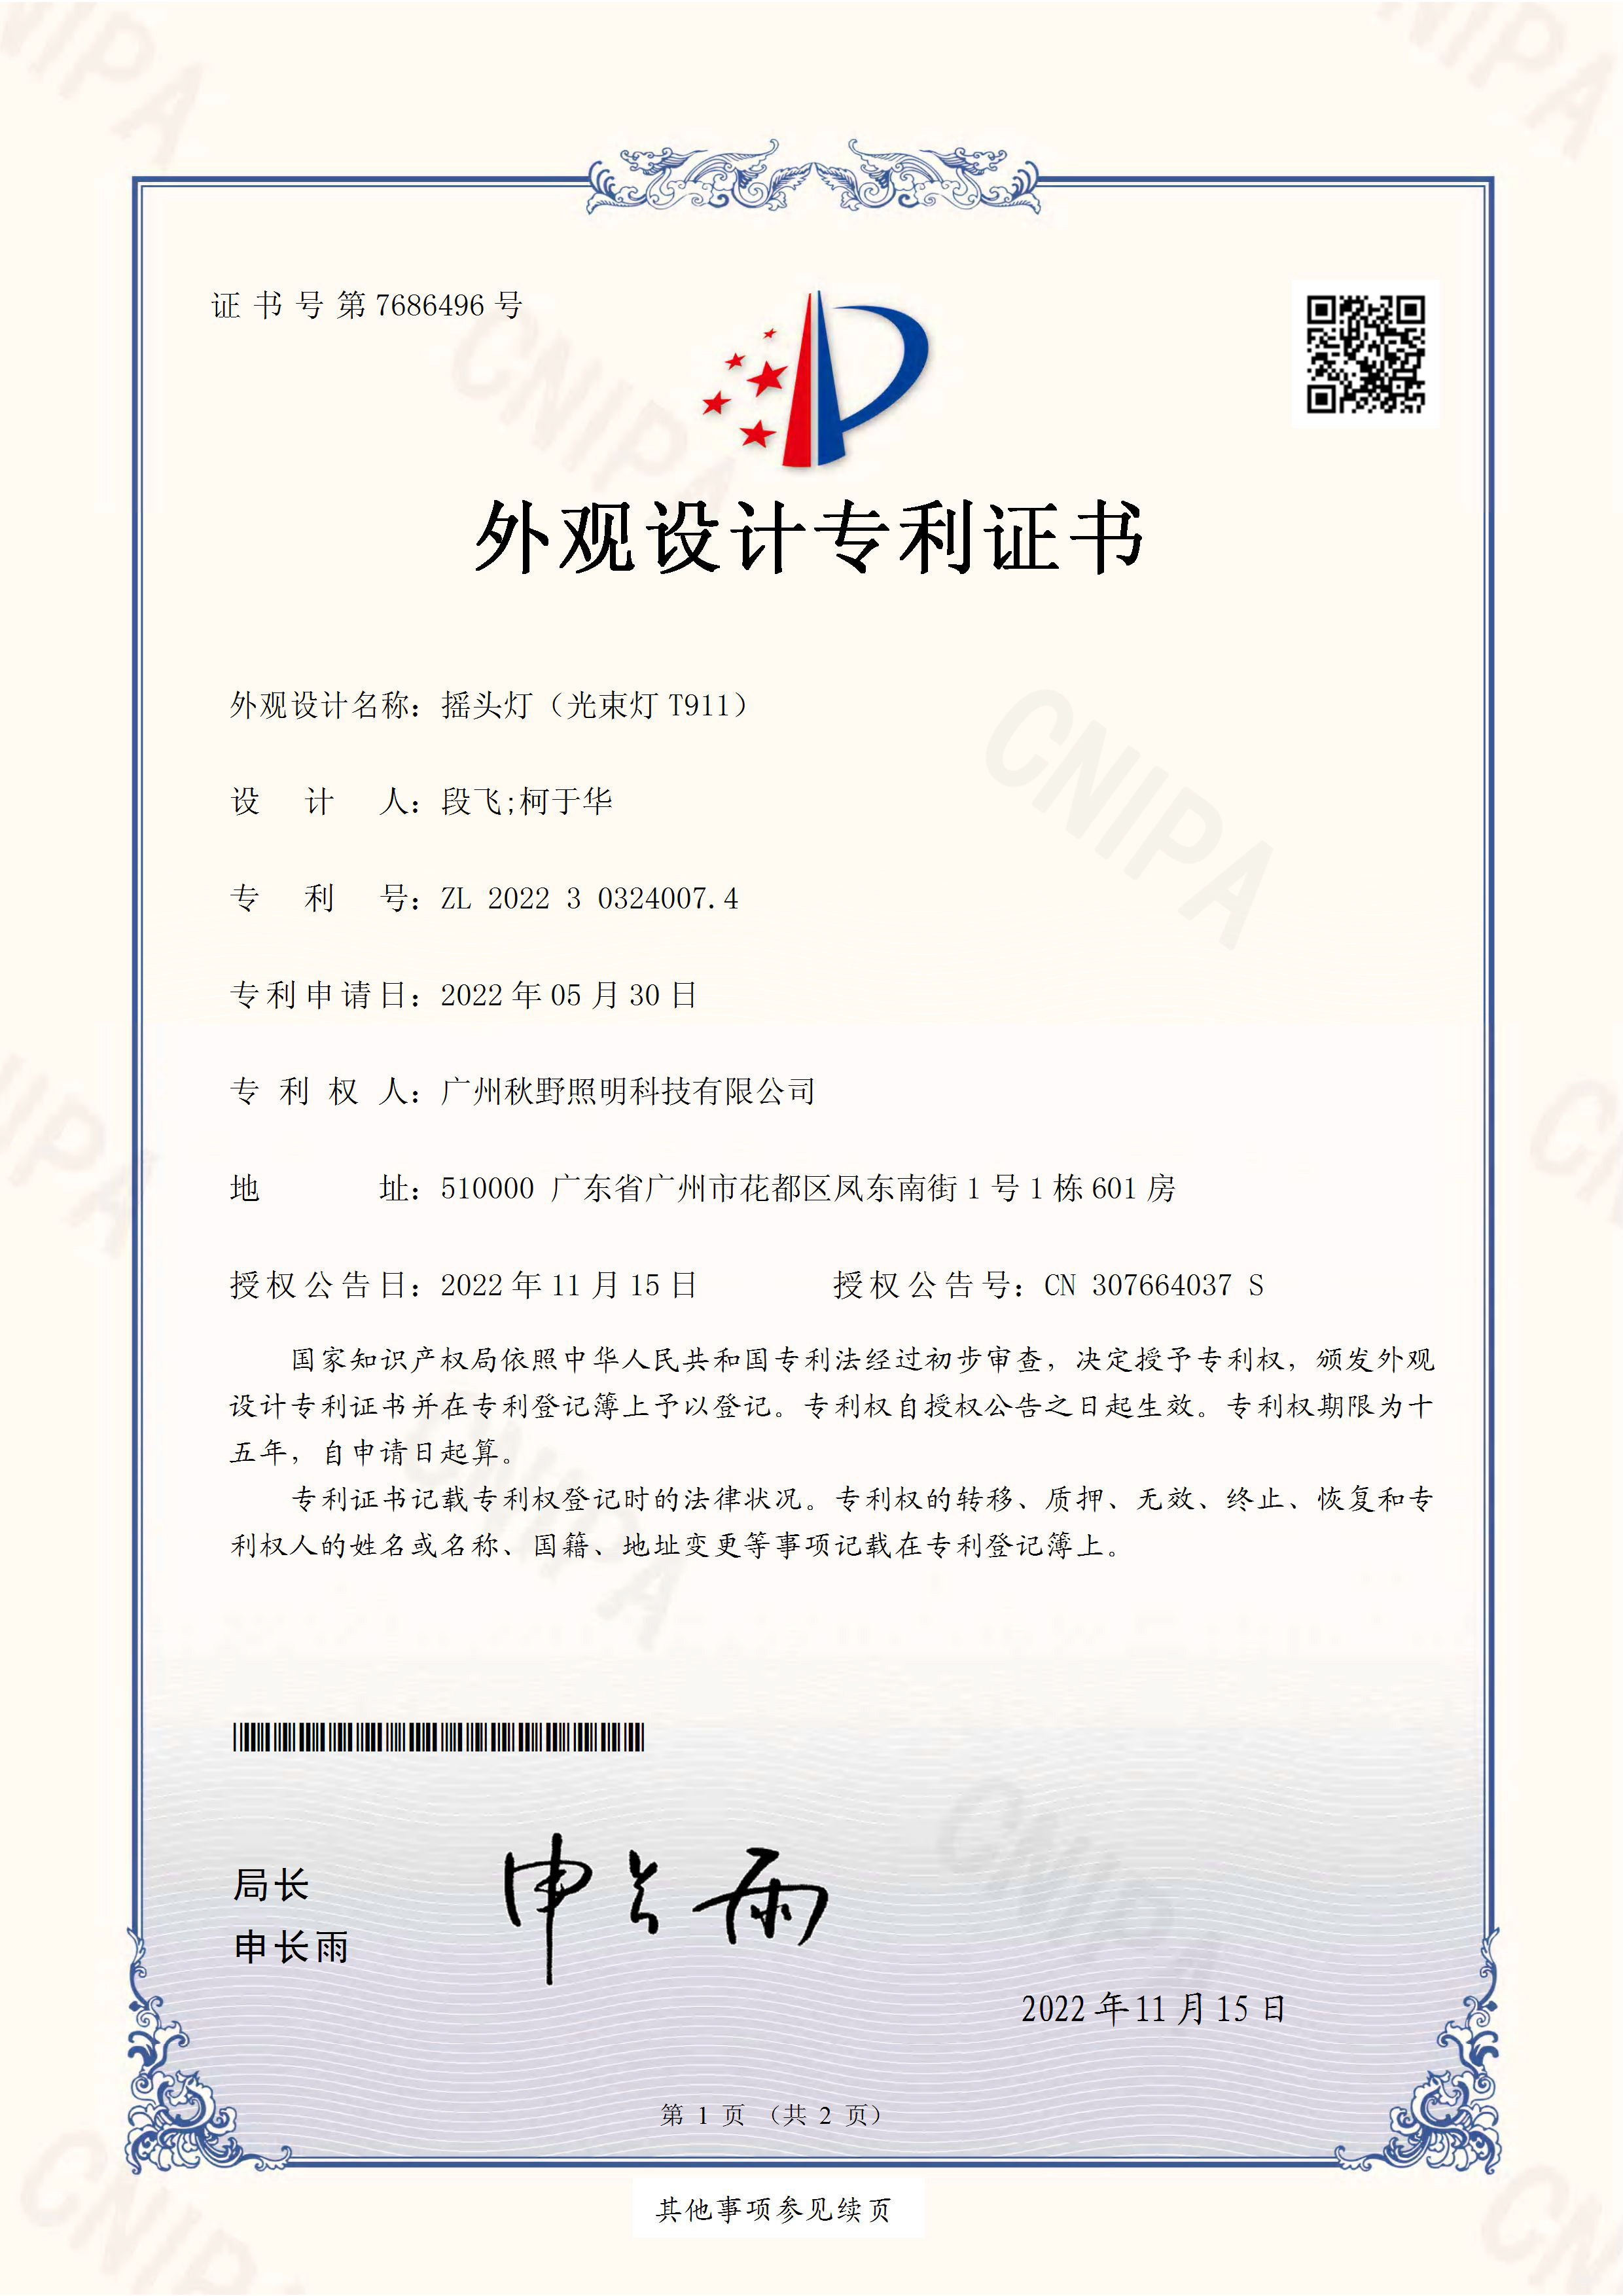 T911 Design Patent Certificate